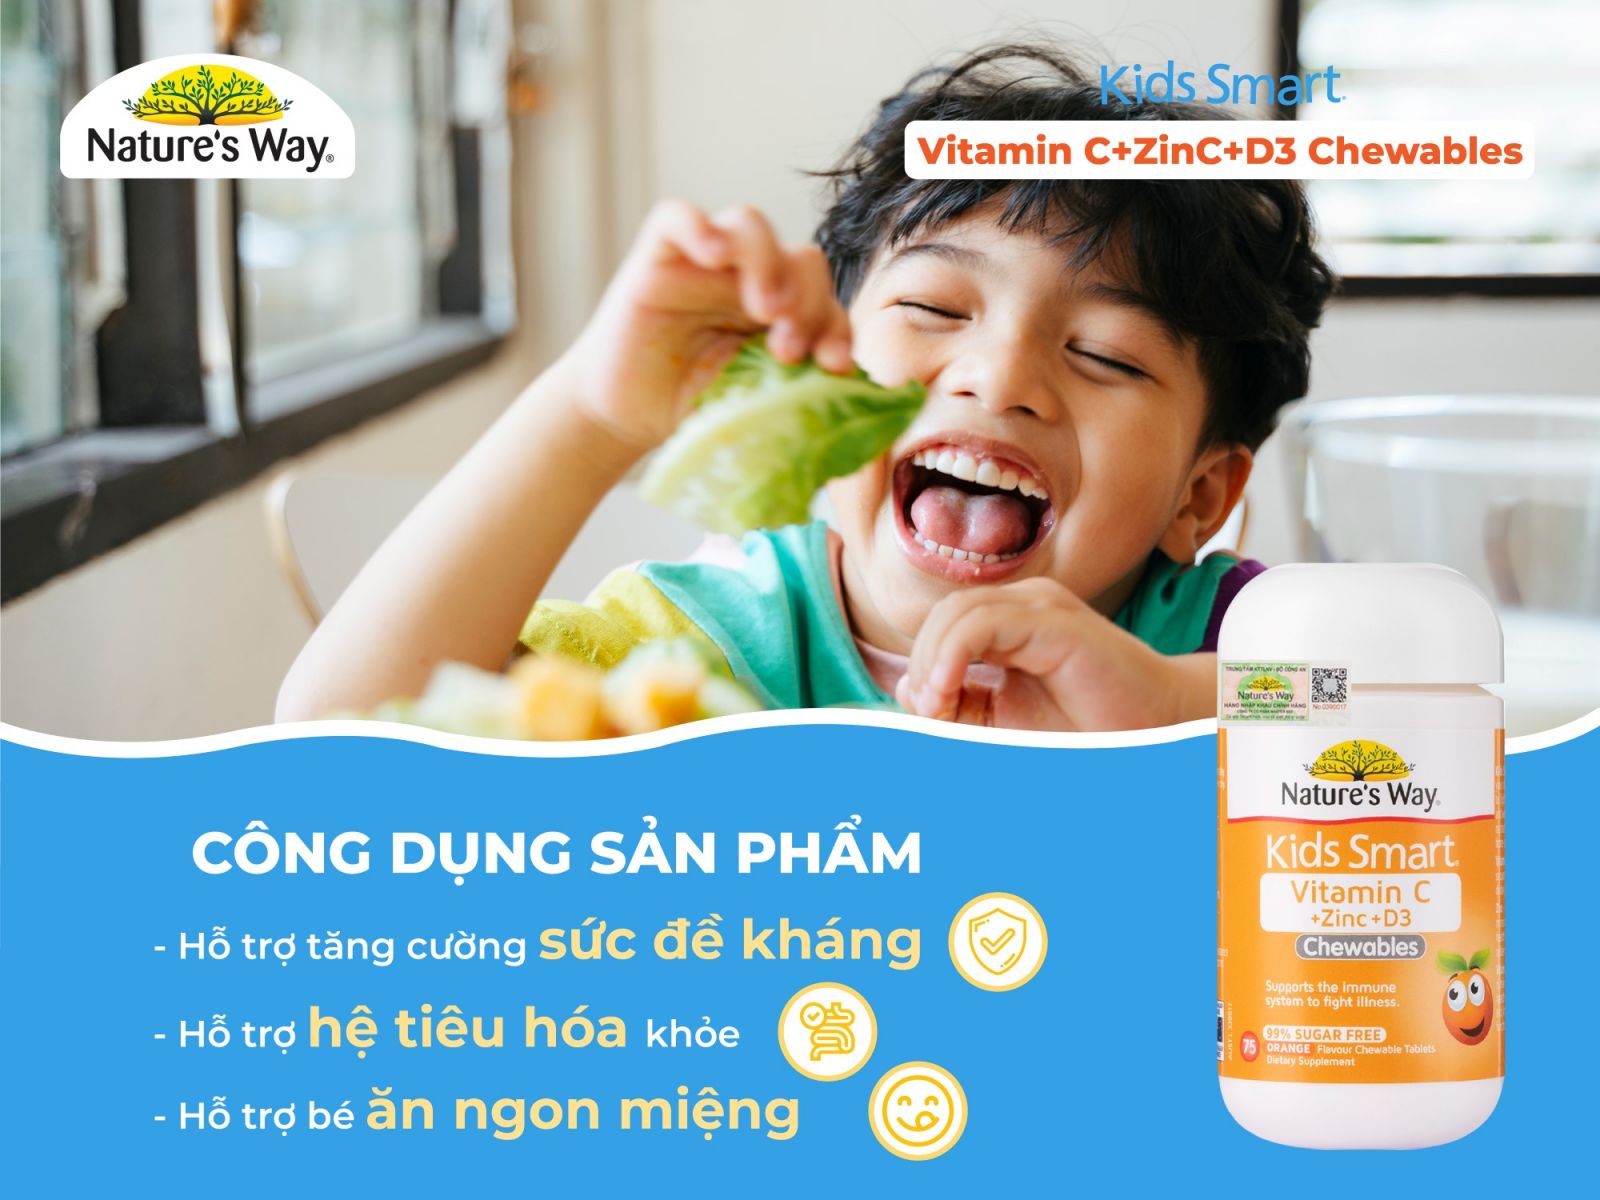 Nature’s Way Kids Smart Vitamin C + Zinc + D3 Chewable Tablets - Bổ sung Vitamin C và Kẽm cho bé